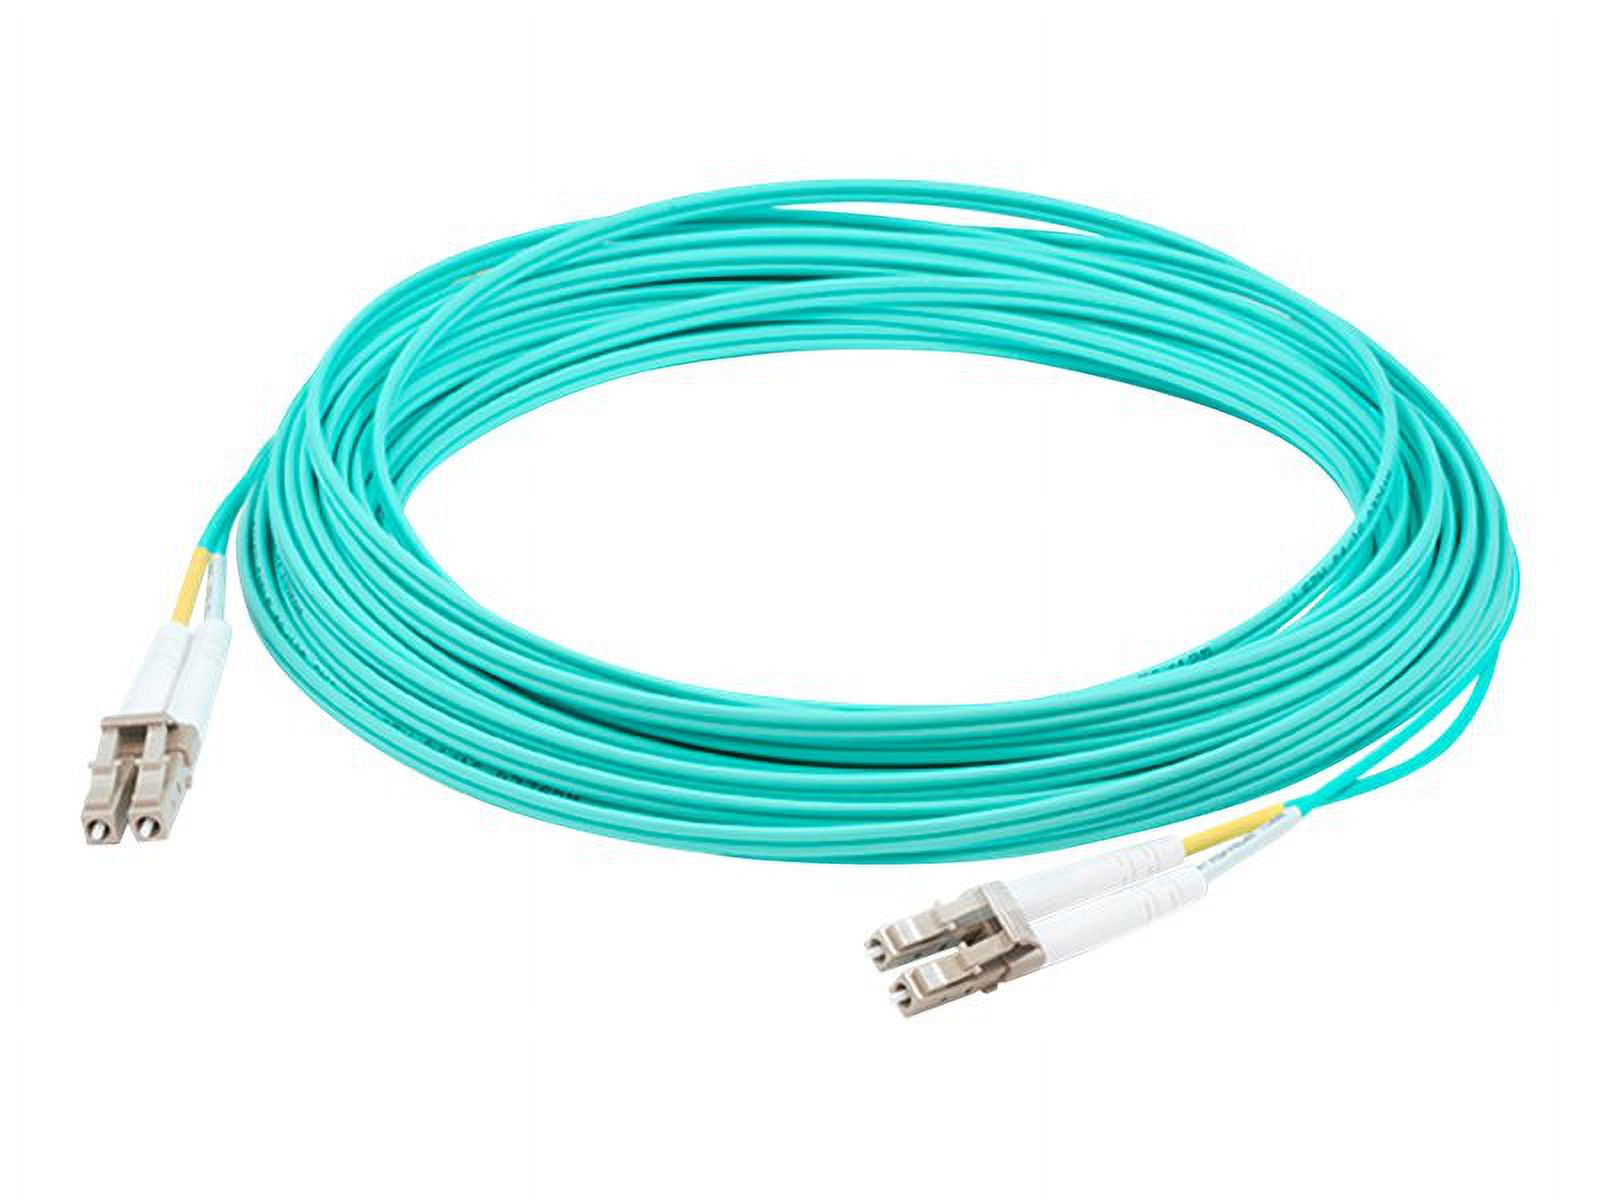 AddOn 50m LC OM3 Aqua Patch Cable - patch cable - 164 ft - aqua - image 2 of 8